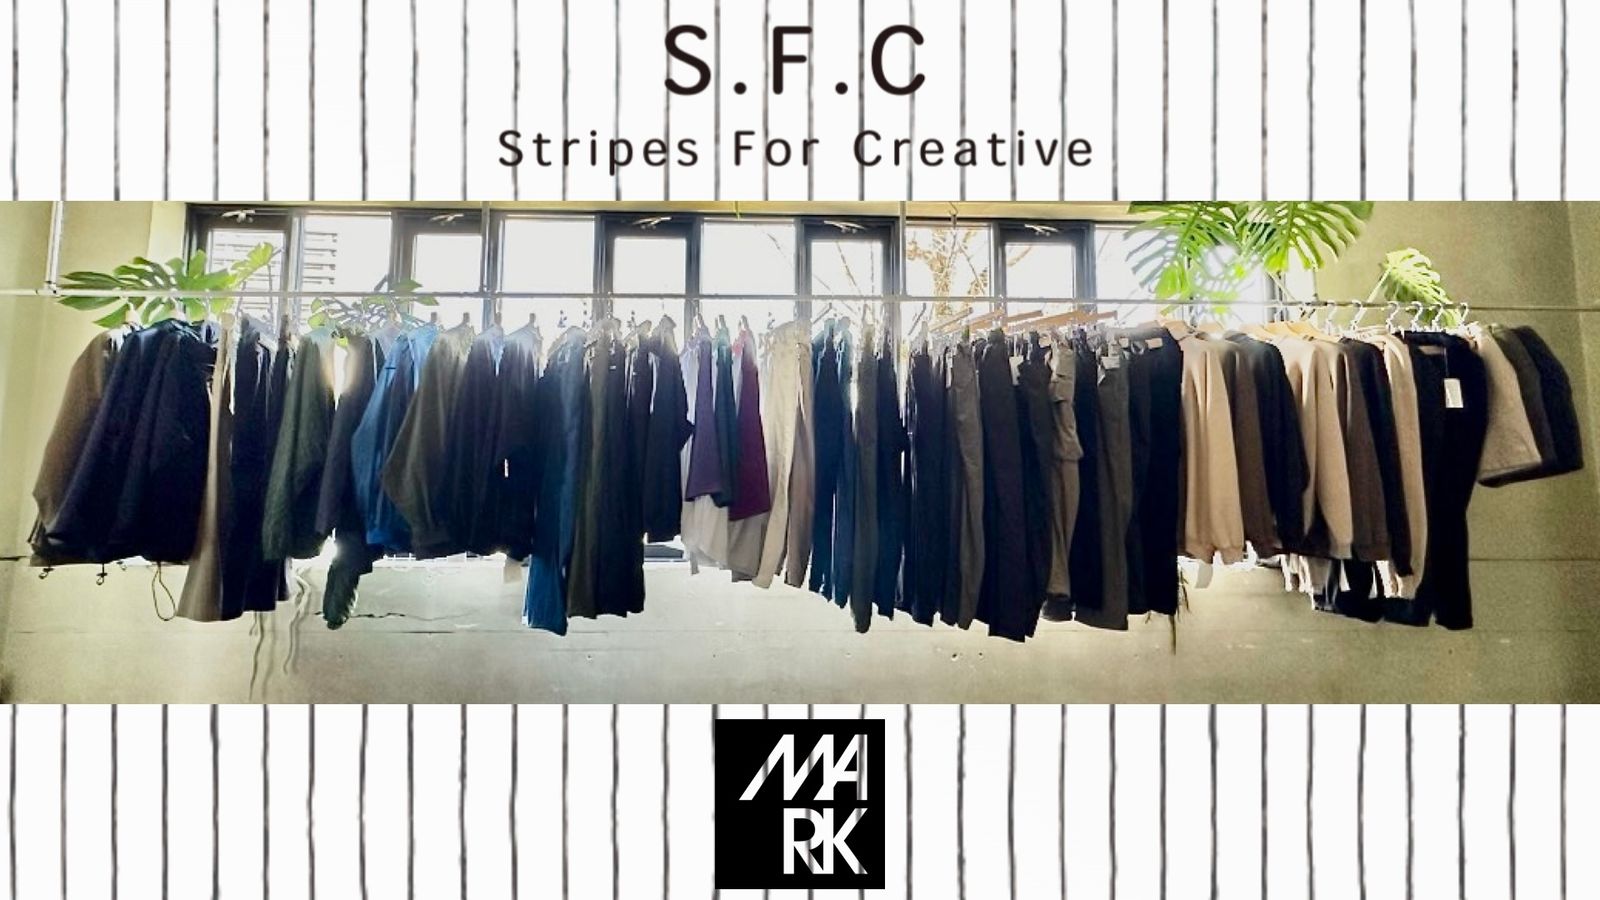 Stripes For Creative (S.F.C) - ストライプ フォー クリエイティブ